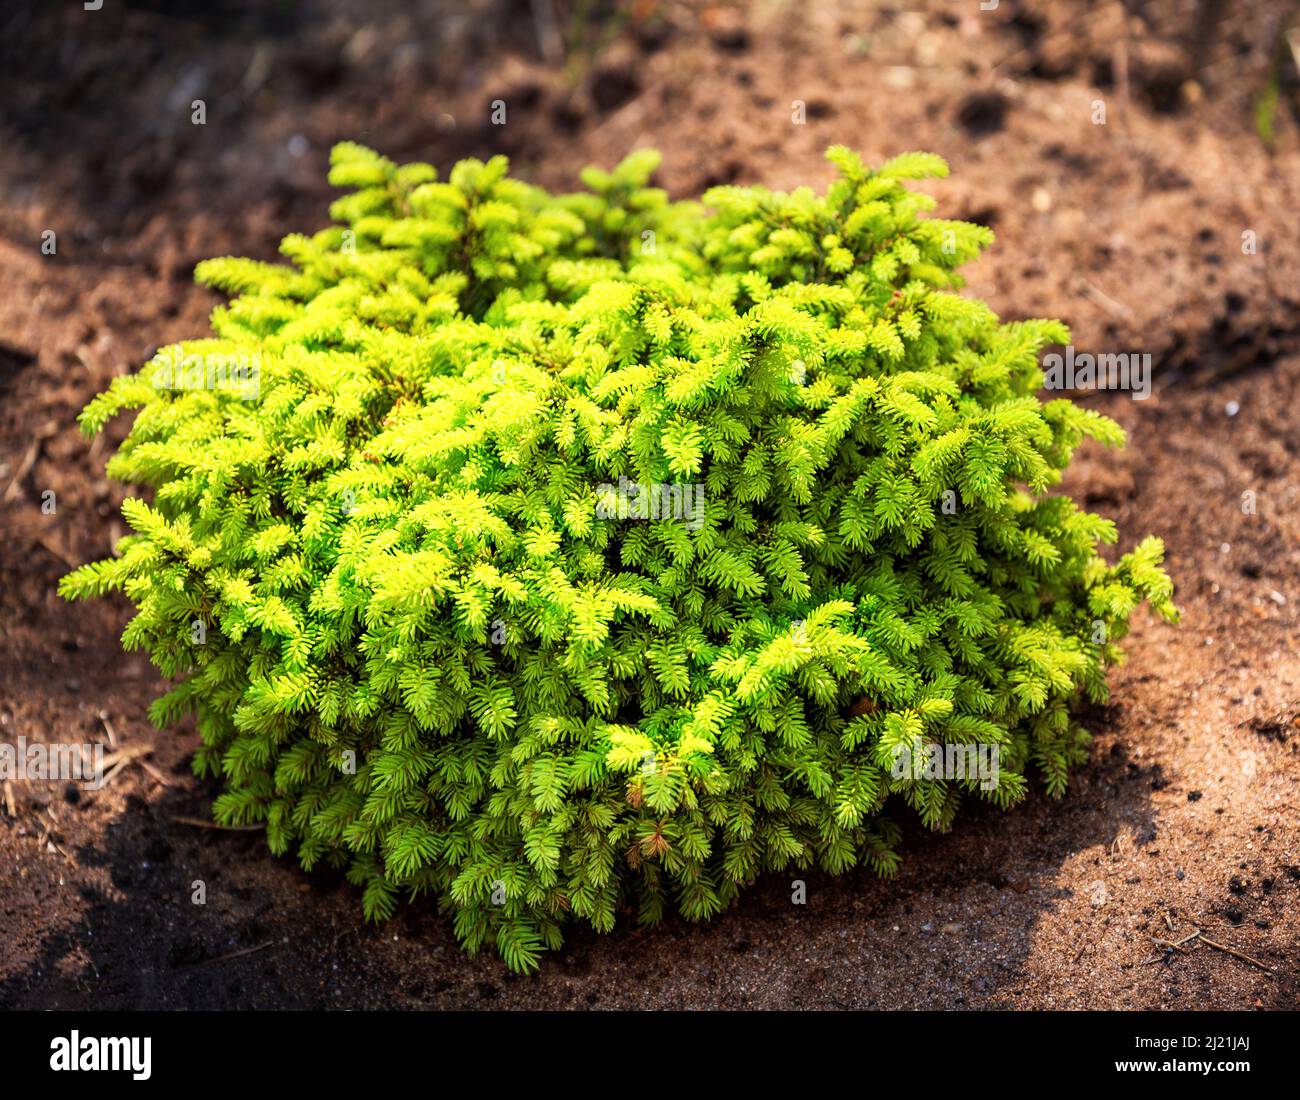 Young plant Picea abies Nidiformis, dwarf ornamental spruce Stock Photo